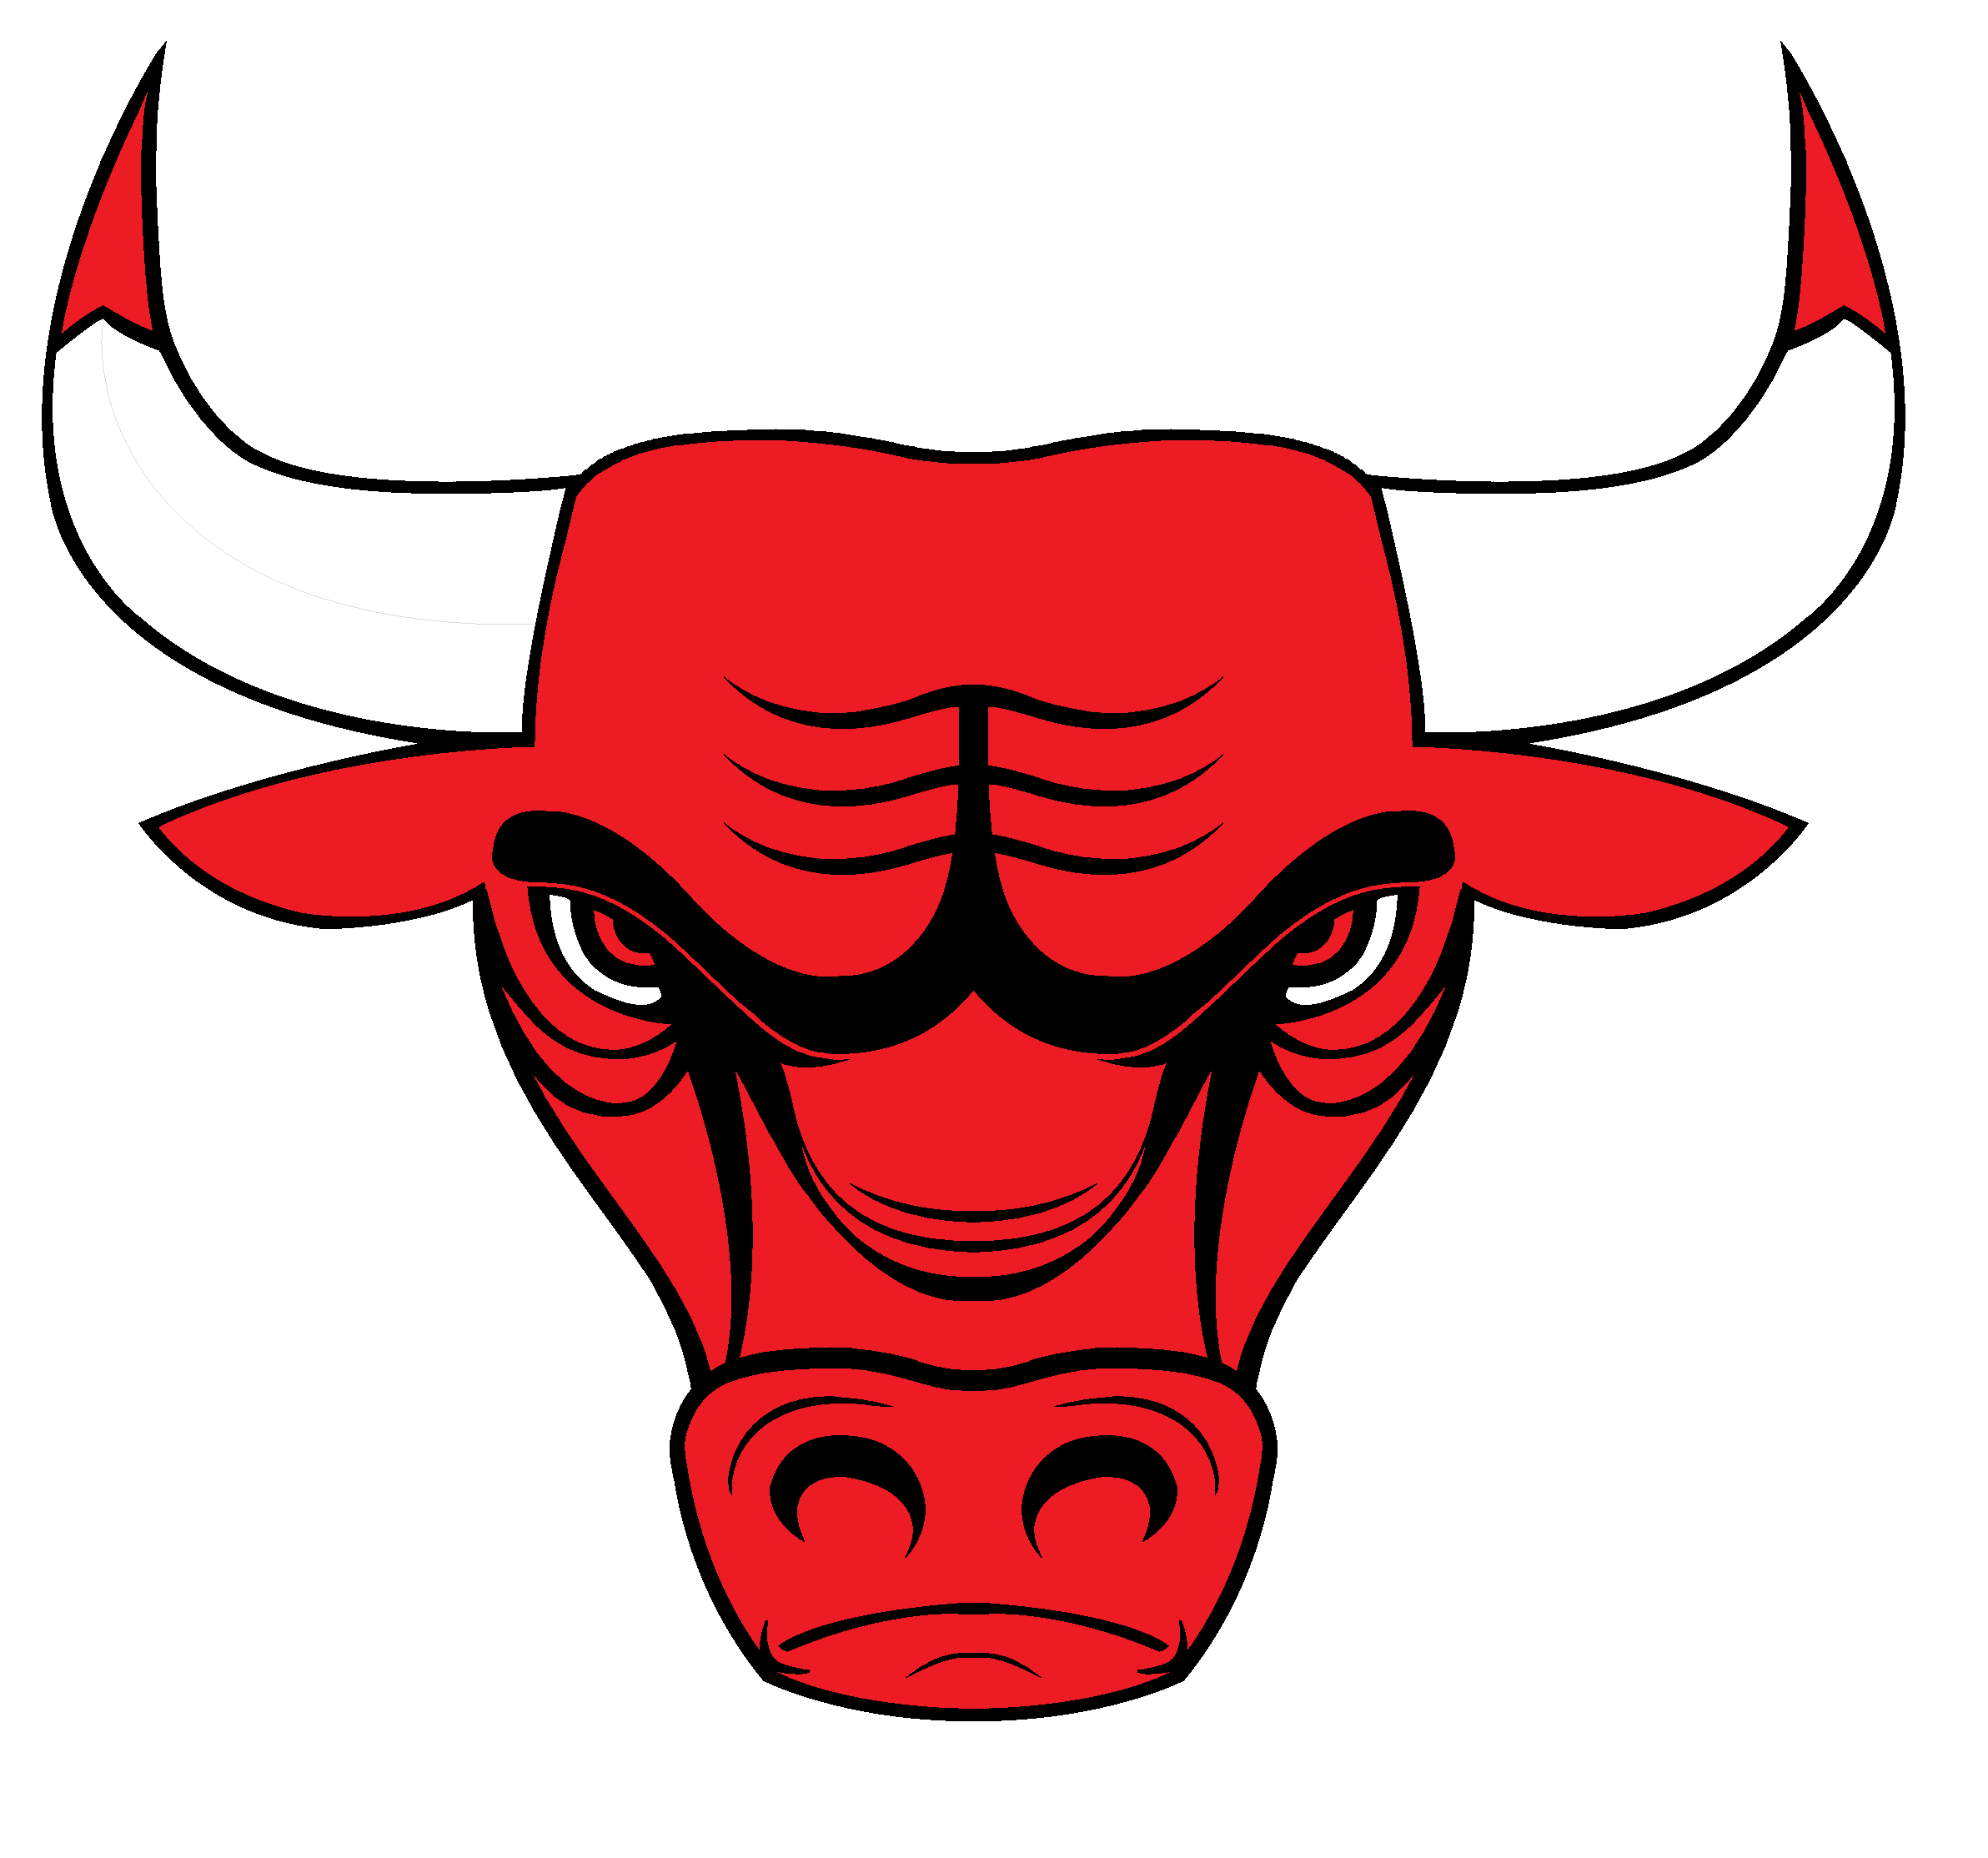 Bulls Logo - Concepts - Chris Creamer's Sports Logos Community ...